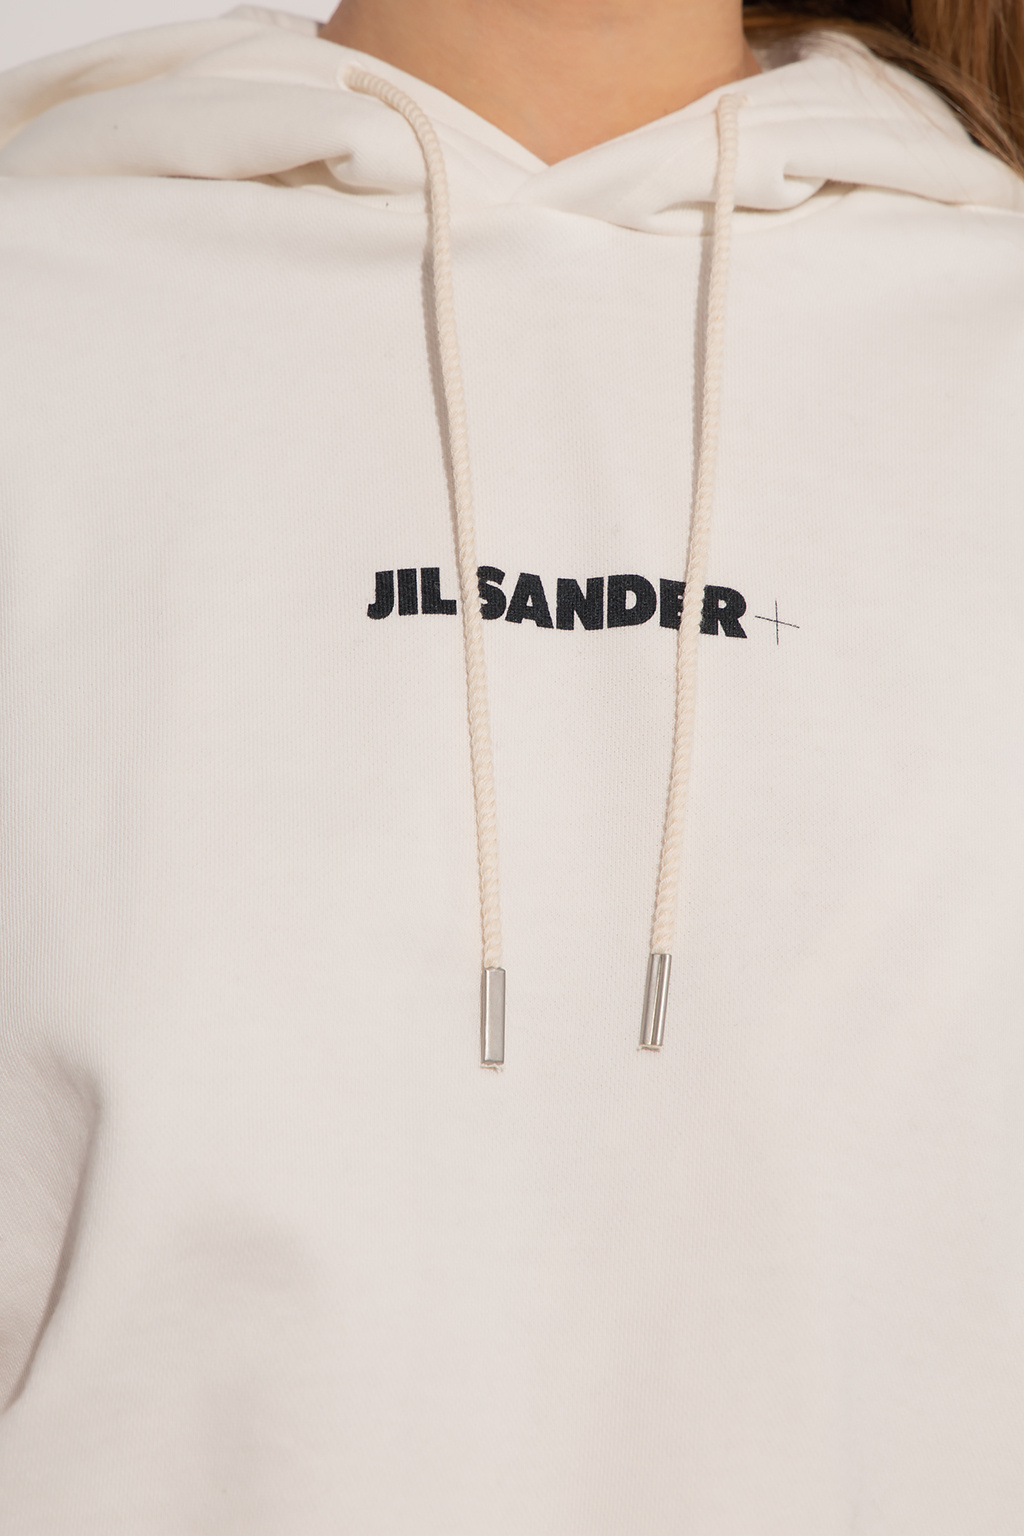 JIL SANDER+ Jil Sander asymmetric collar maxi dress